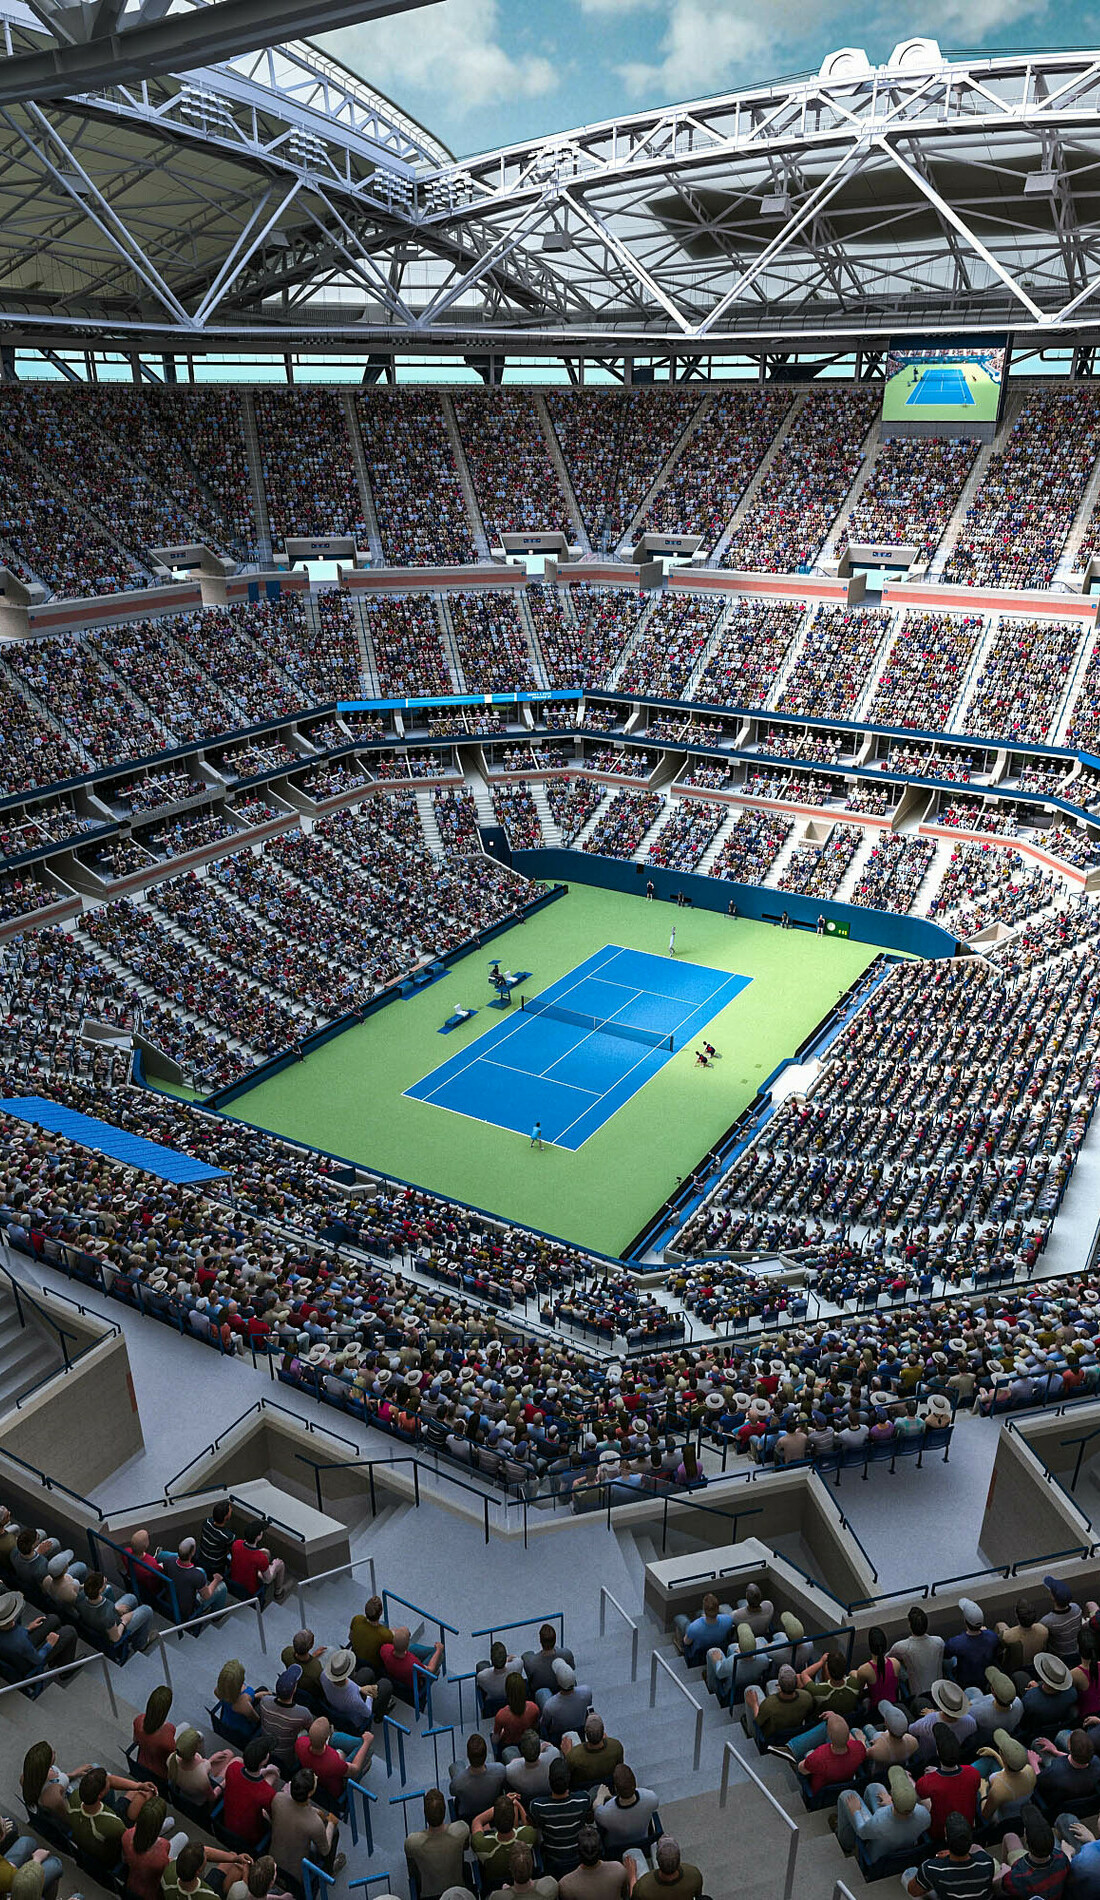 A US Open Tennis live event